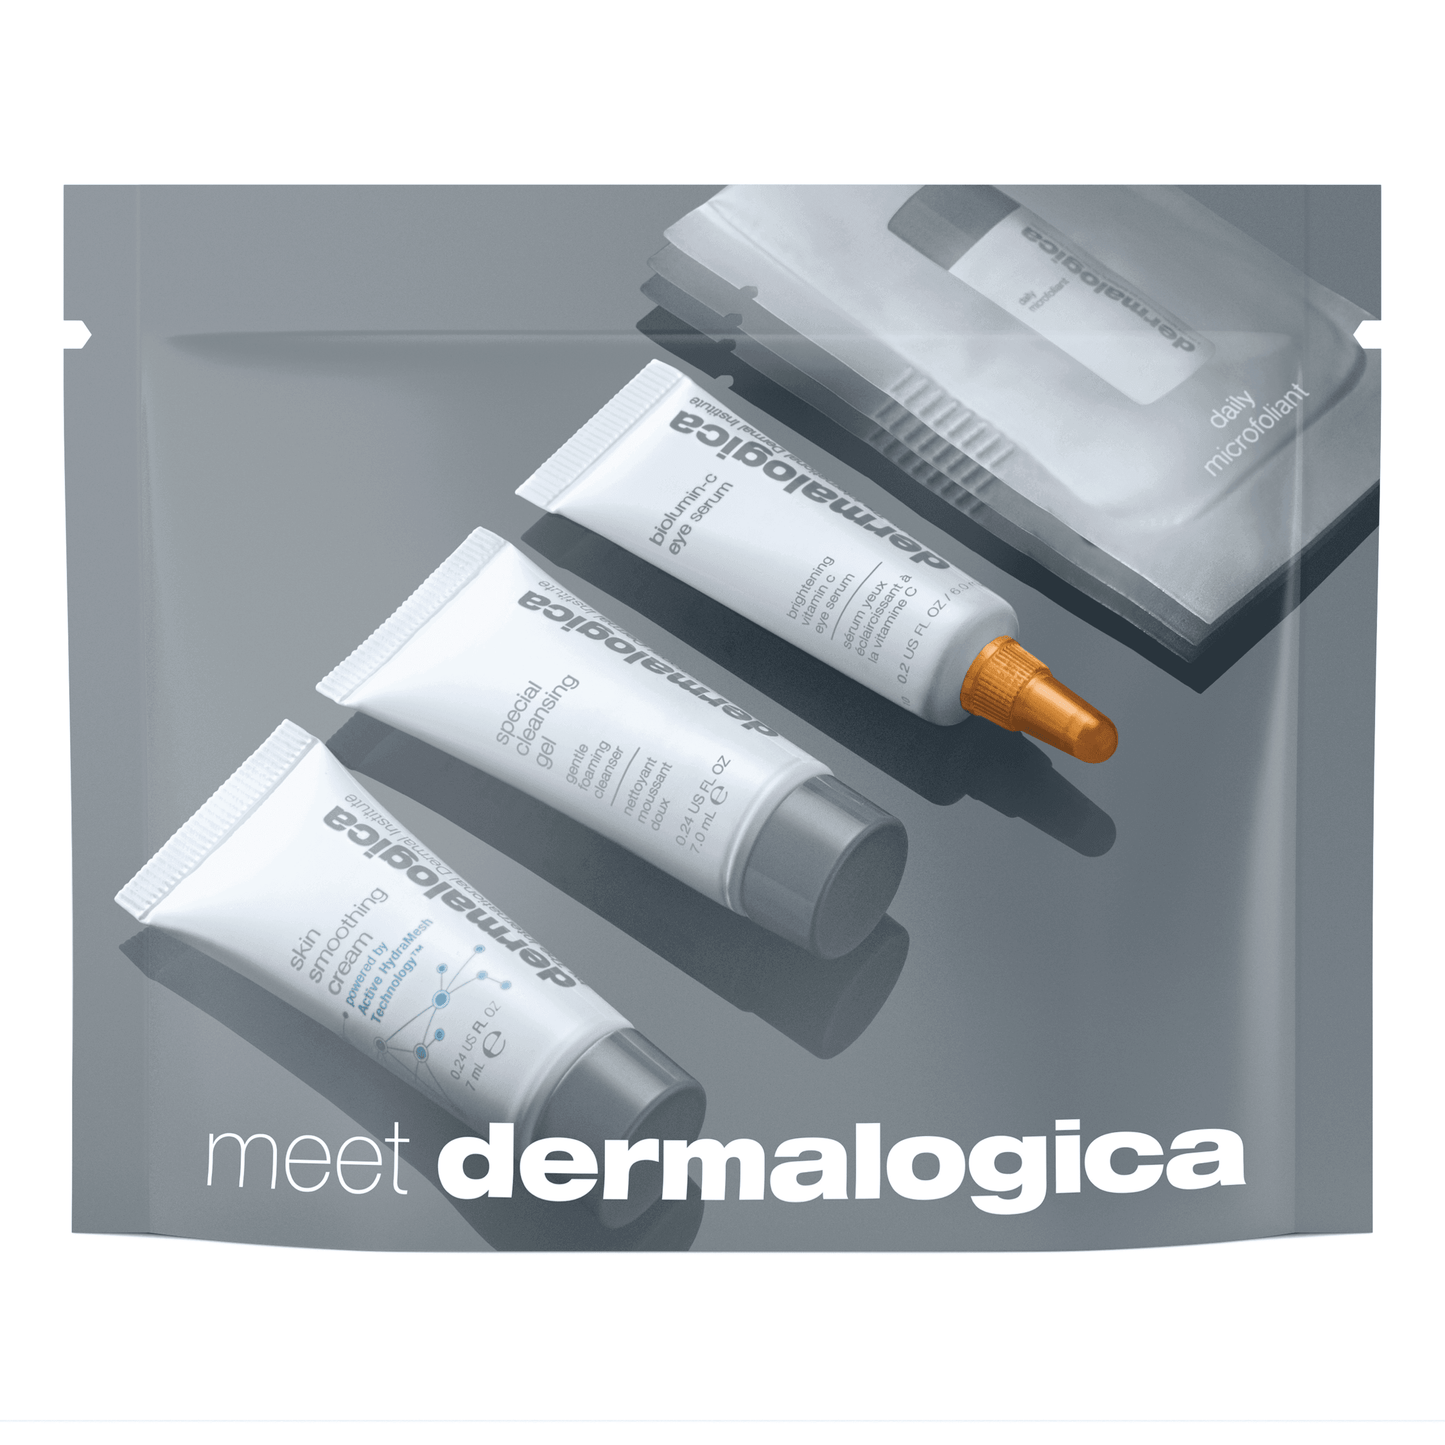 meet dermalogica amenity pack - Dermalogica Singapore